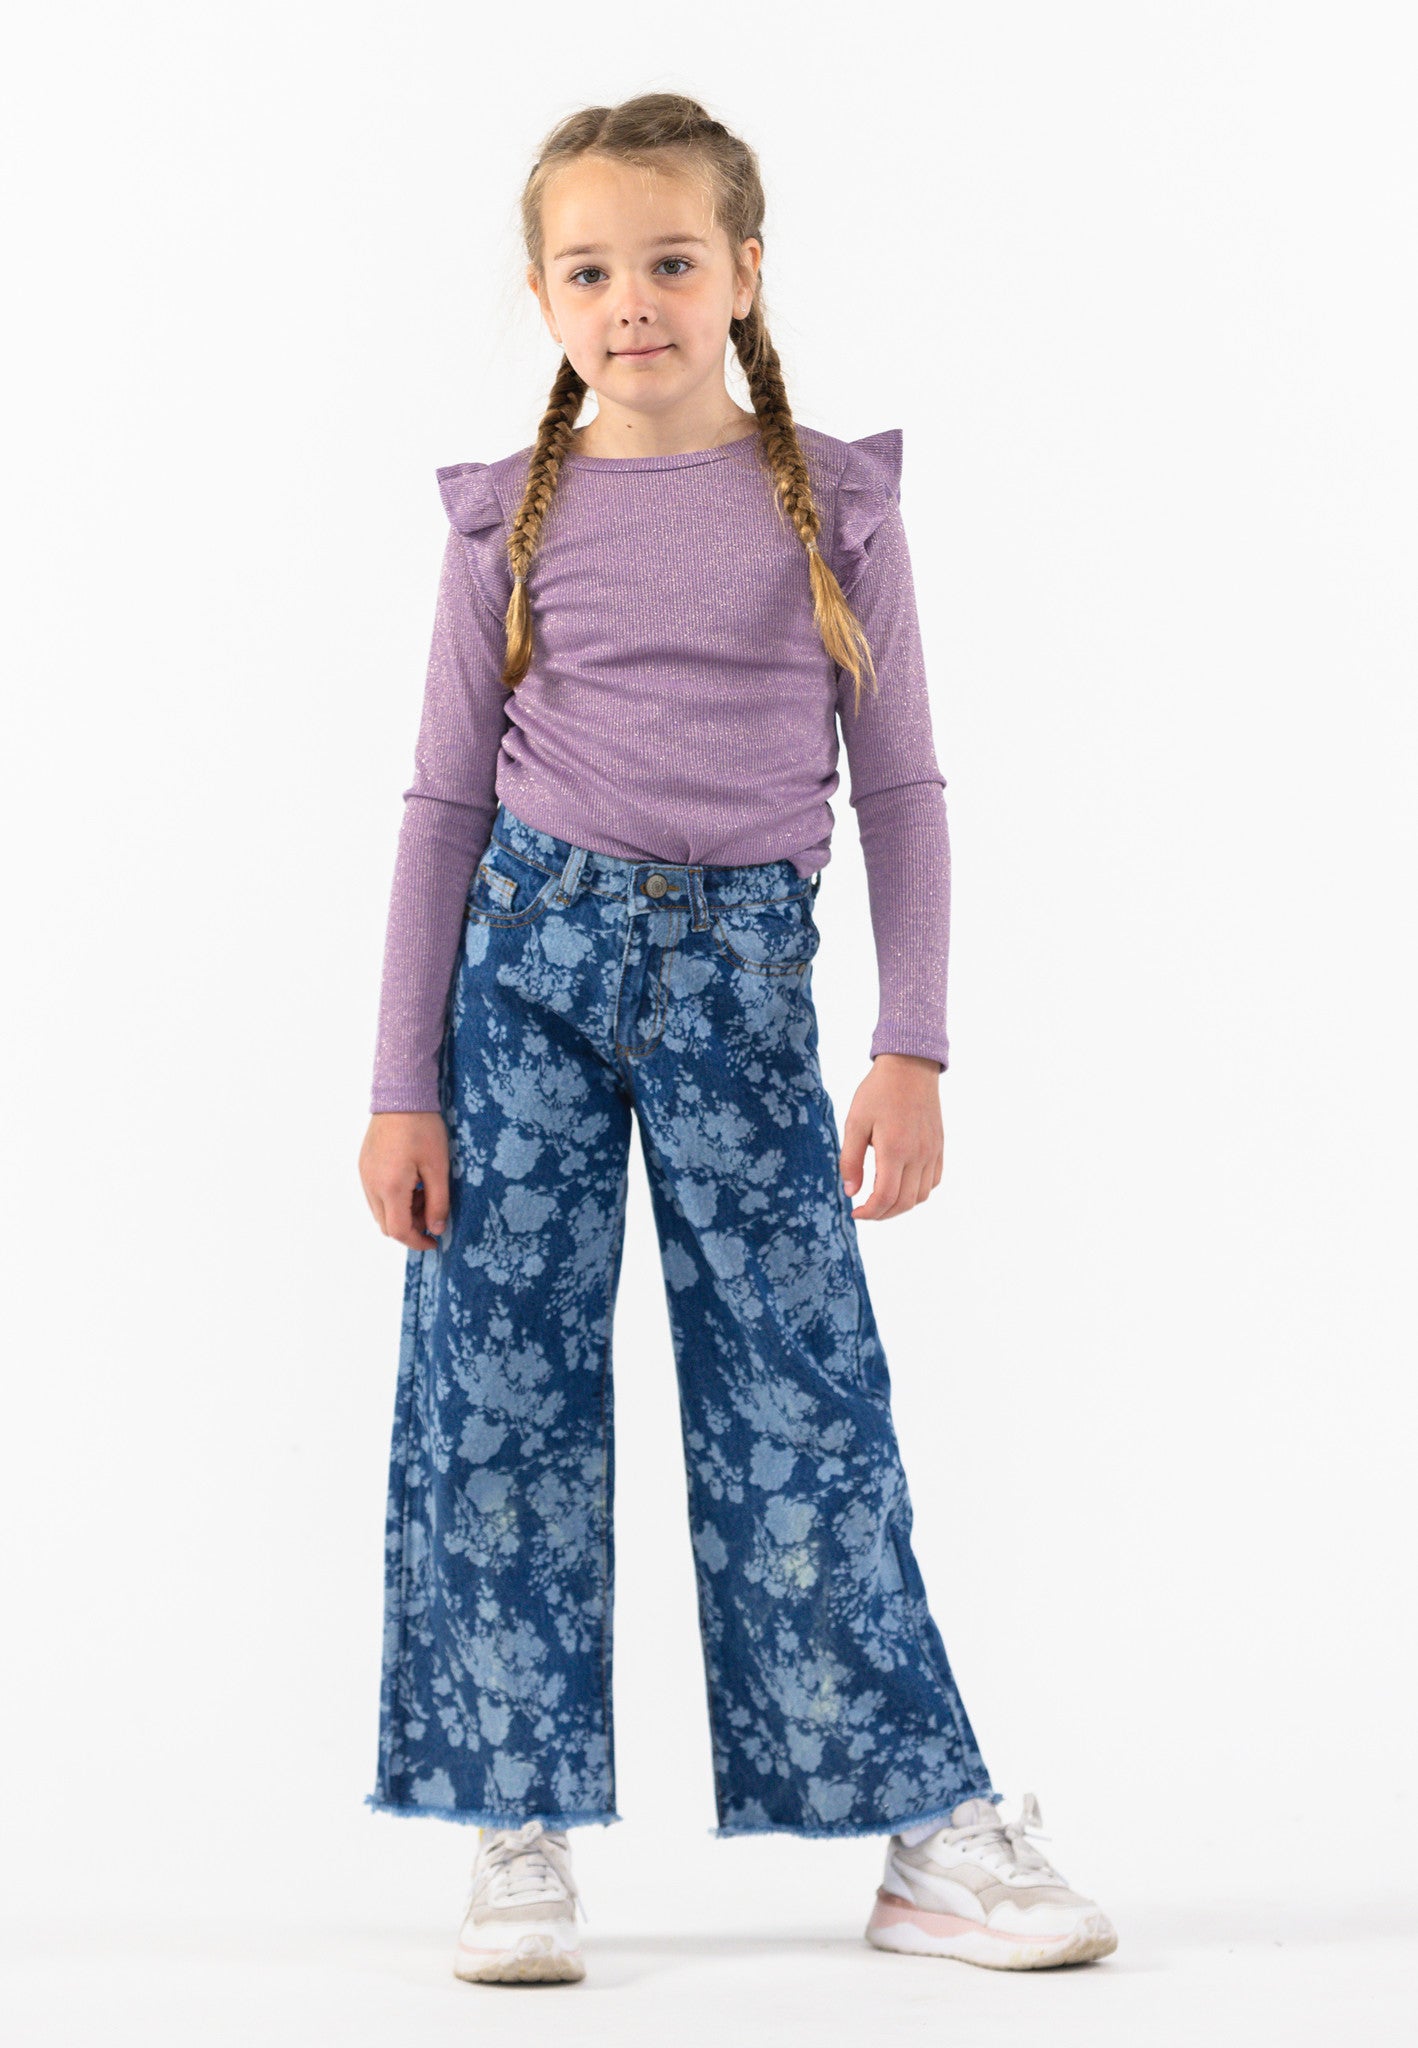 The New - Florana pants